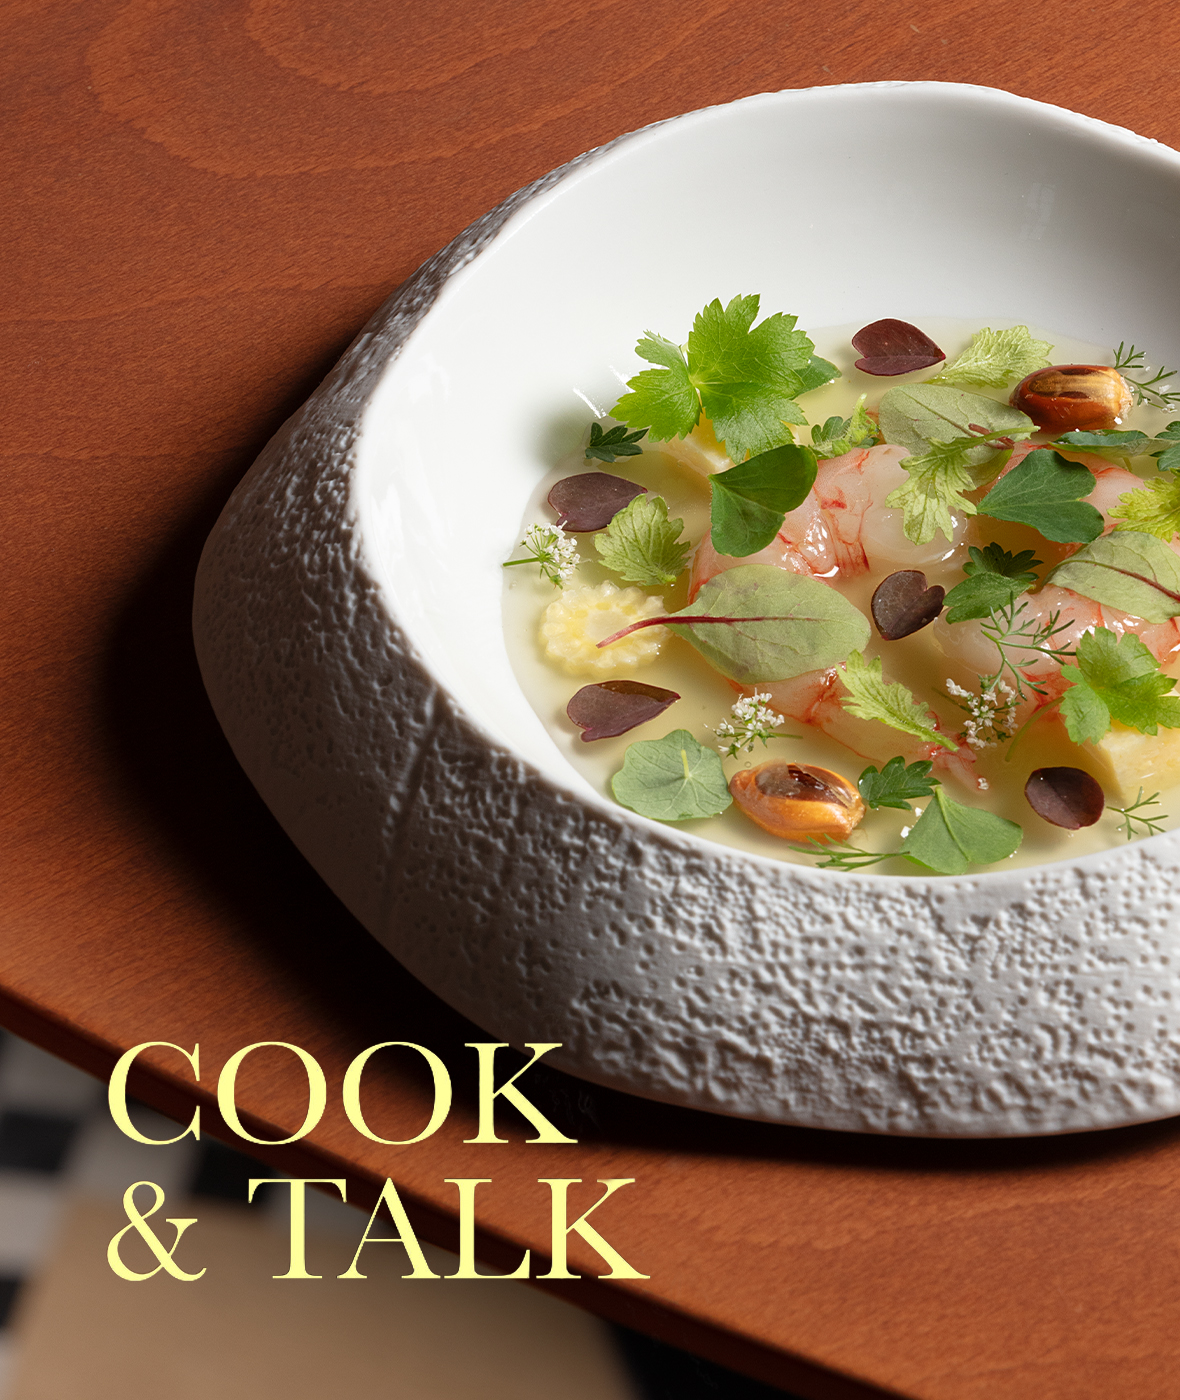 Vergés - Cook & Talk. Taste of summer